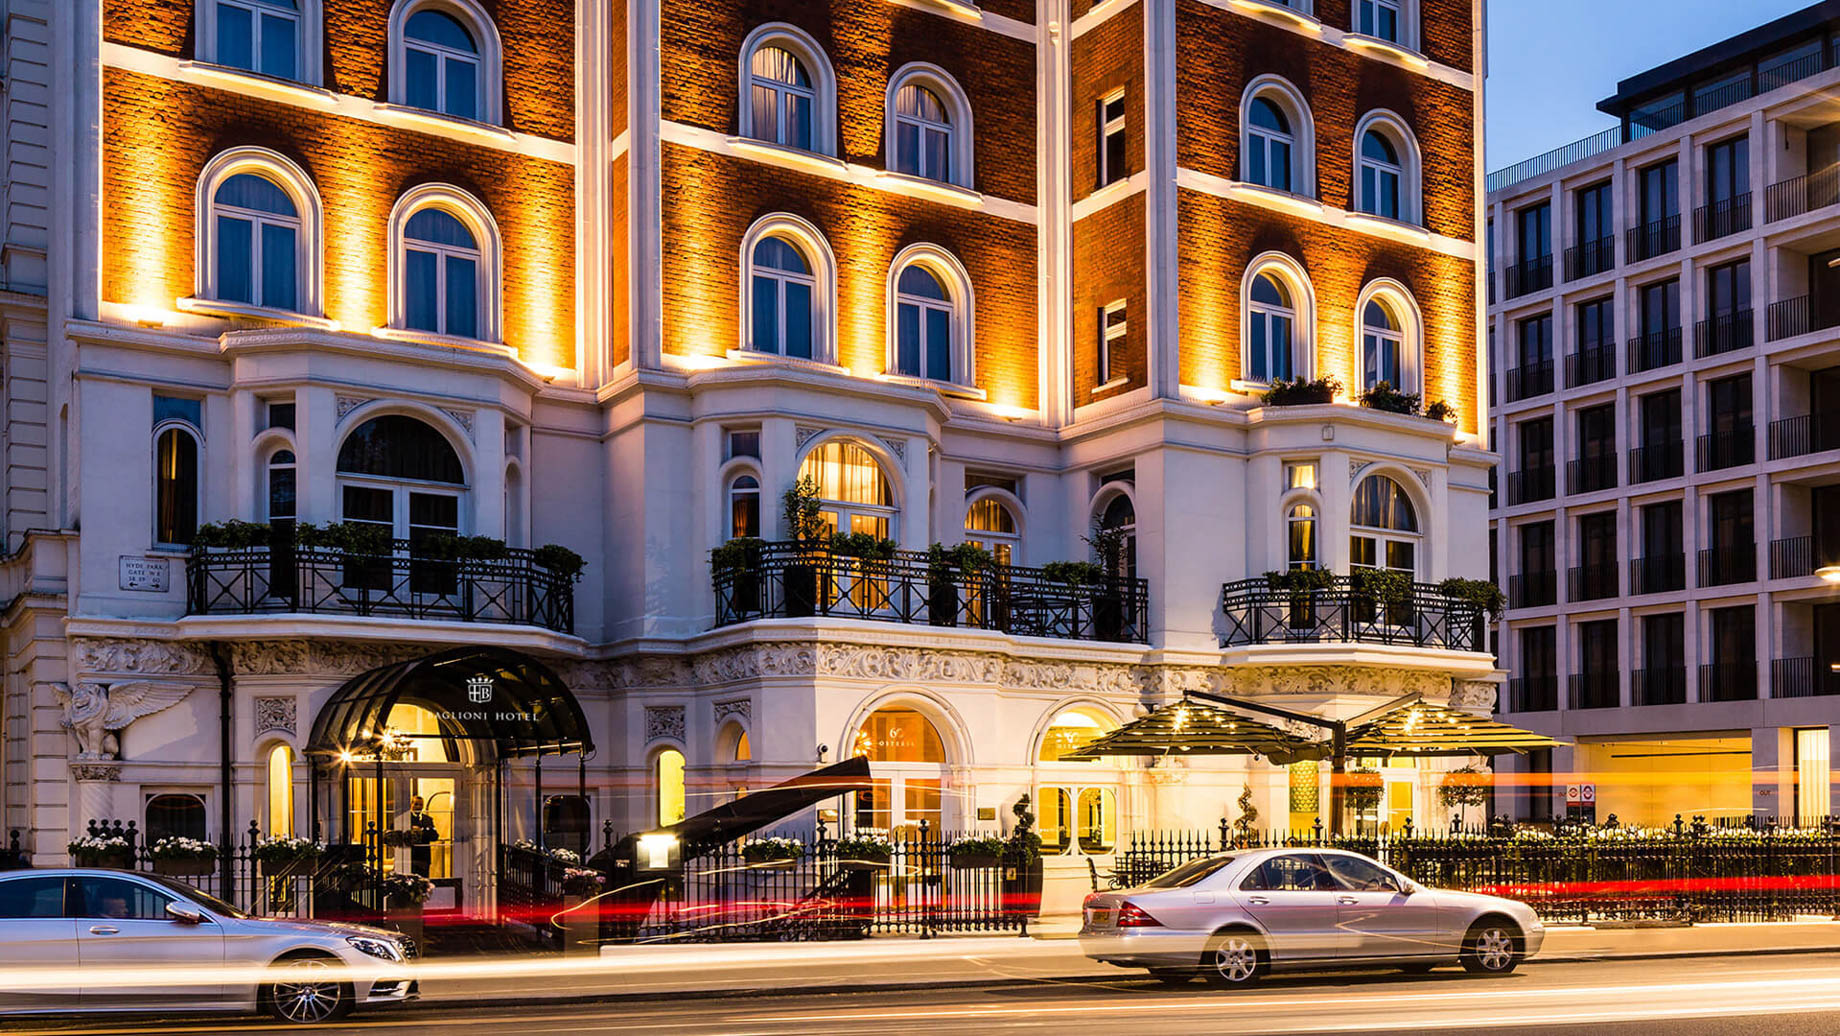 Baglioni Hotel London - South Kensington, London, United Kingdom - Exterior Night